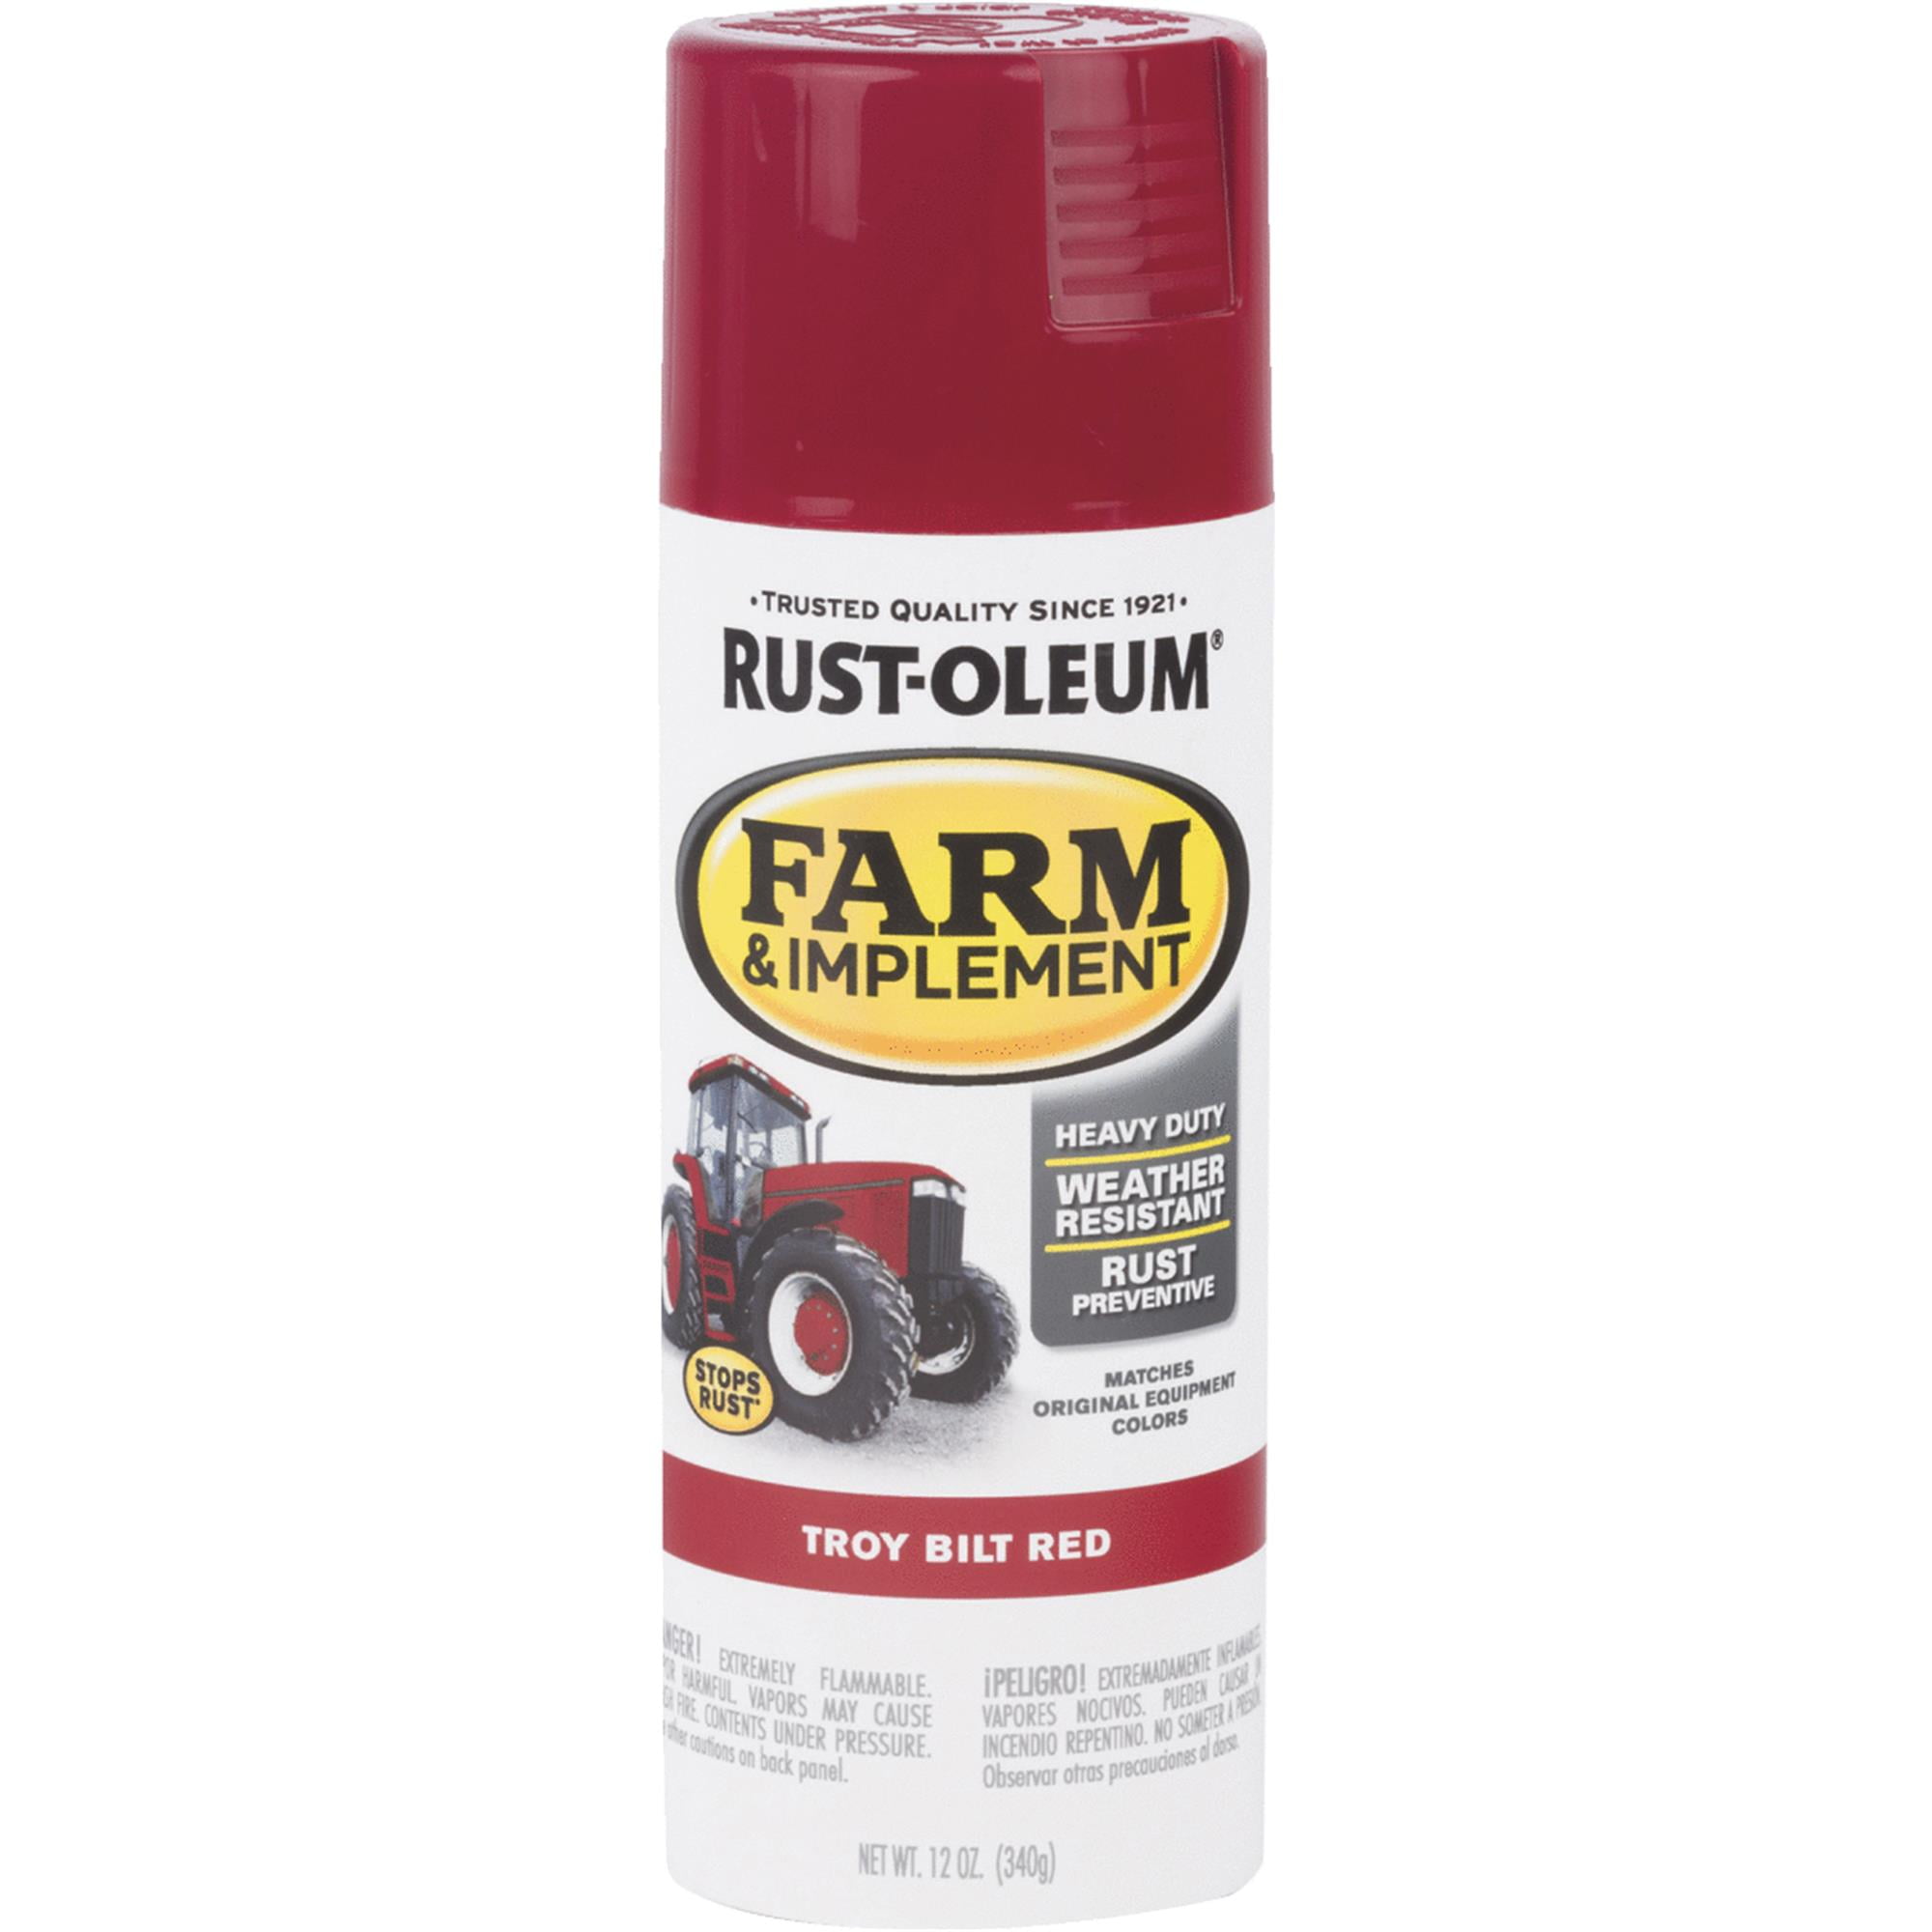 Rust-Oleum Farm & Implement Spray Paint - Walmart.com - Walmart.com